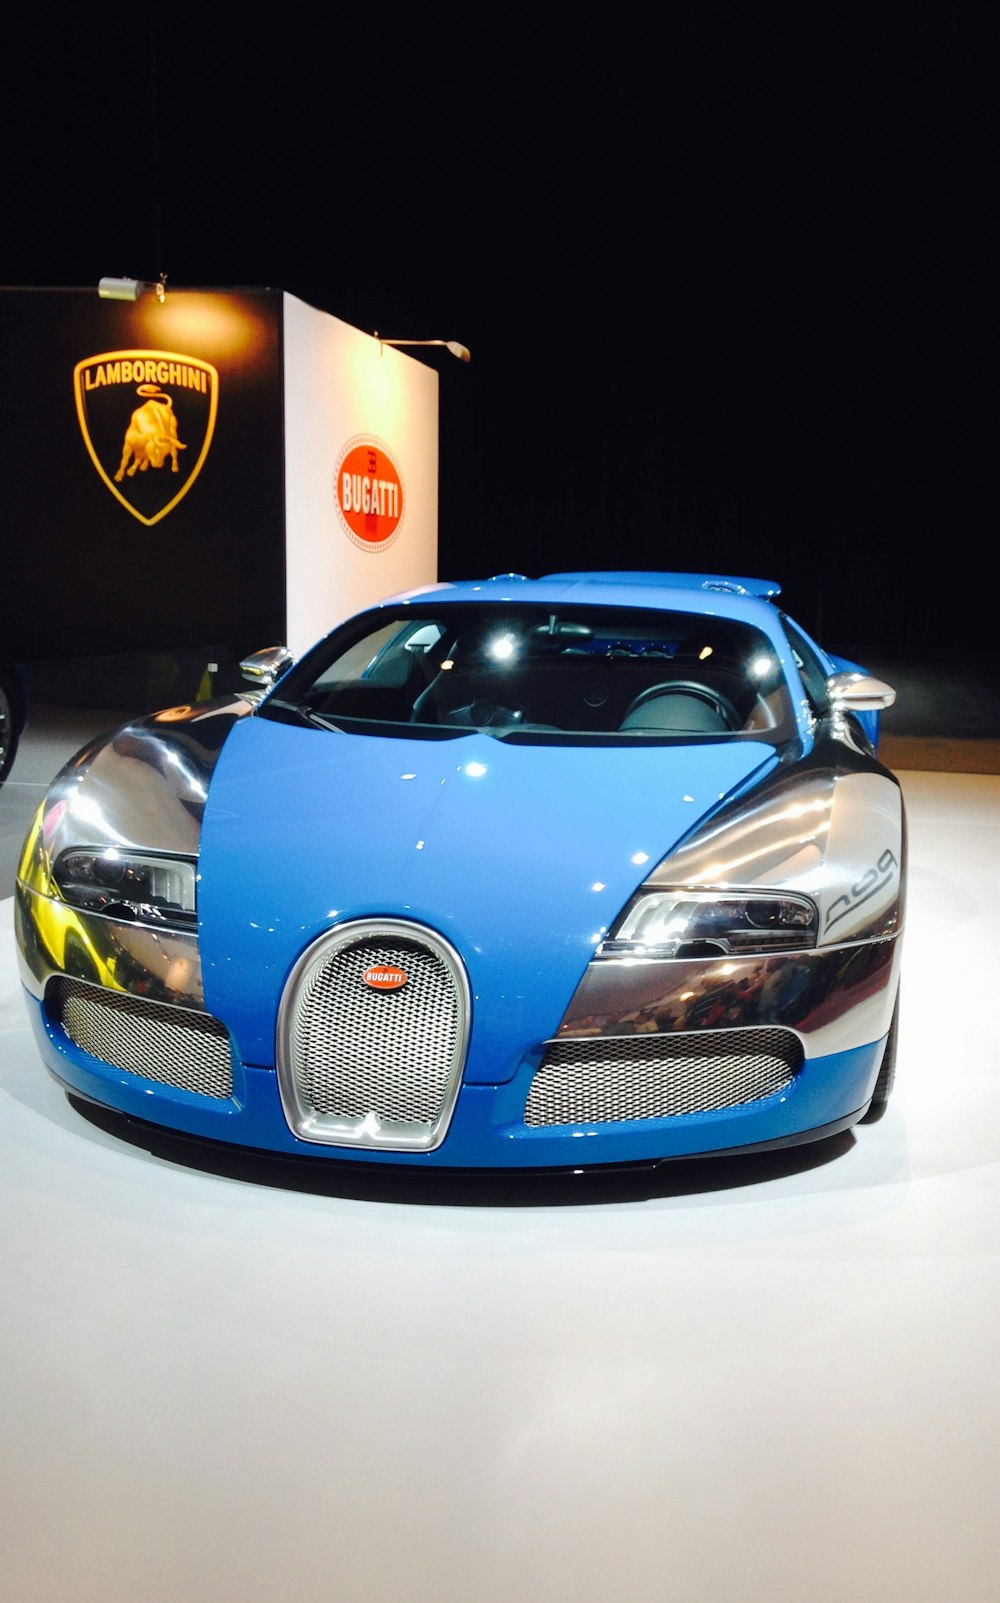 a blue bugatti on display at a car show